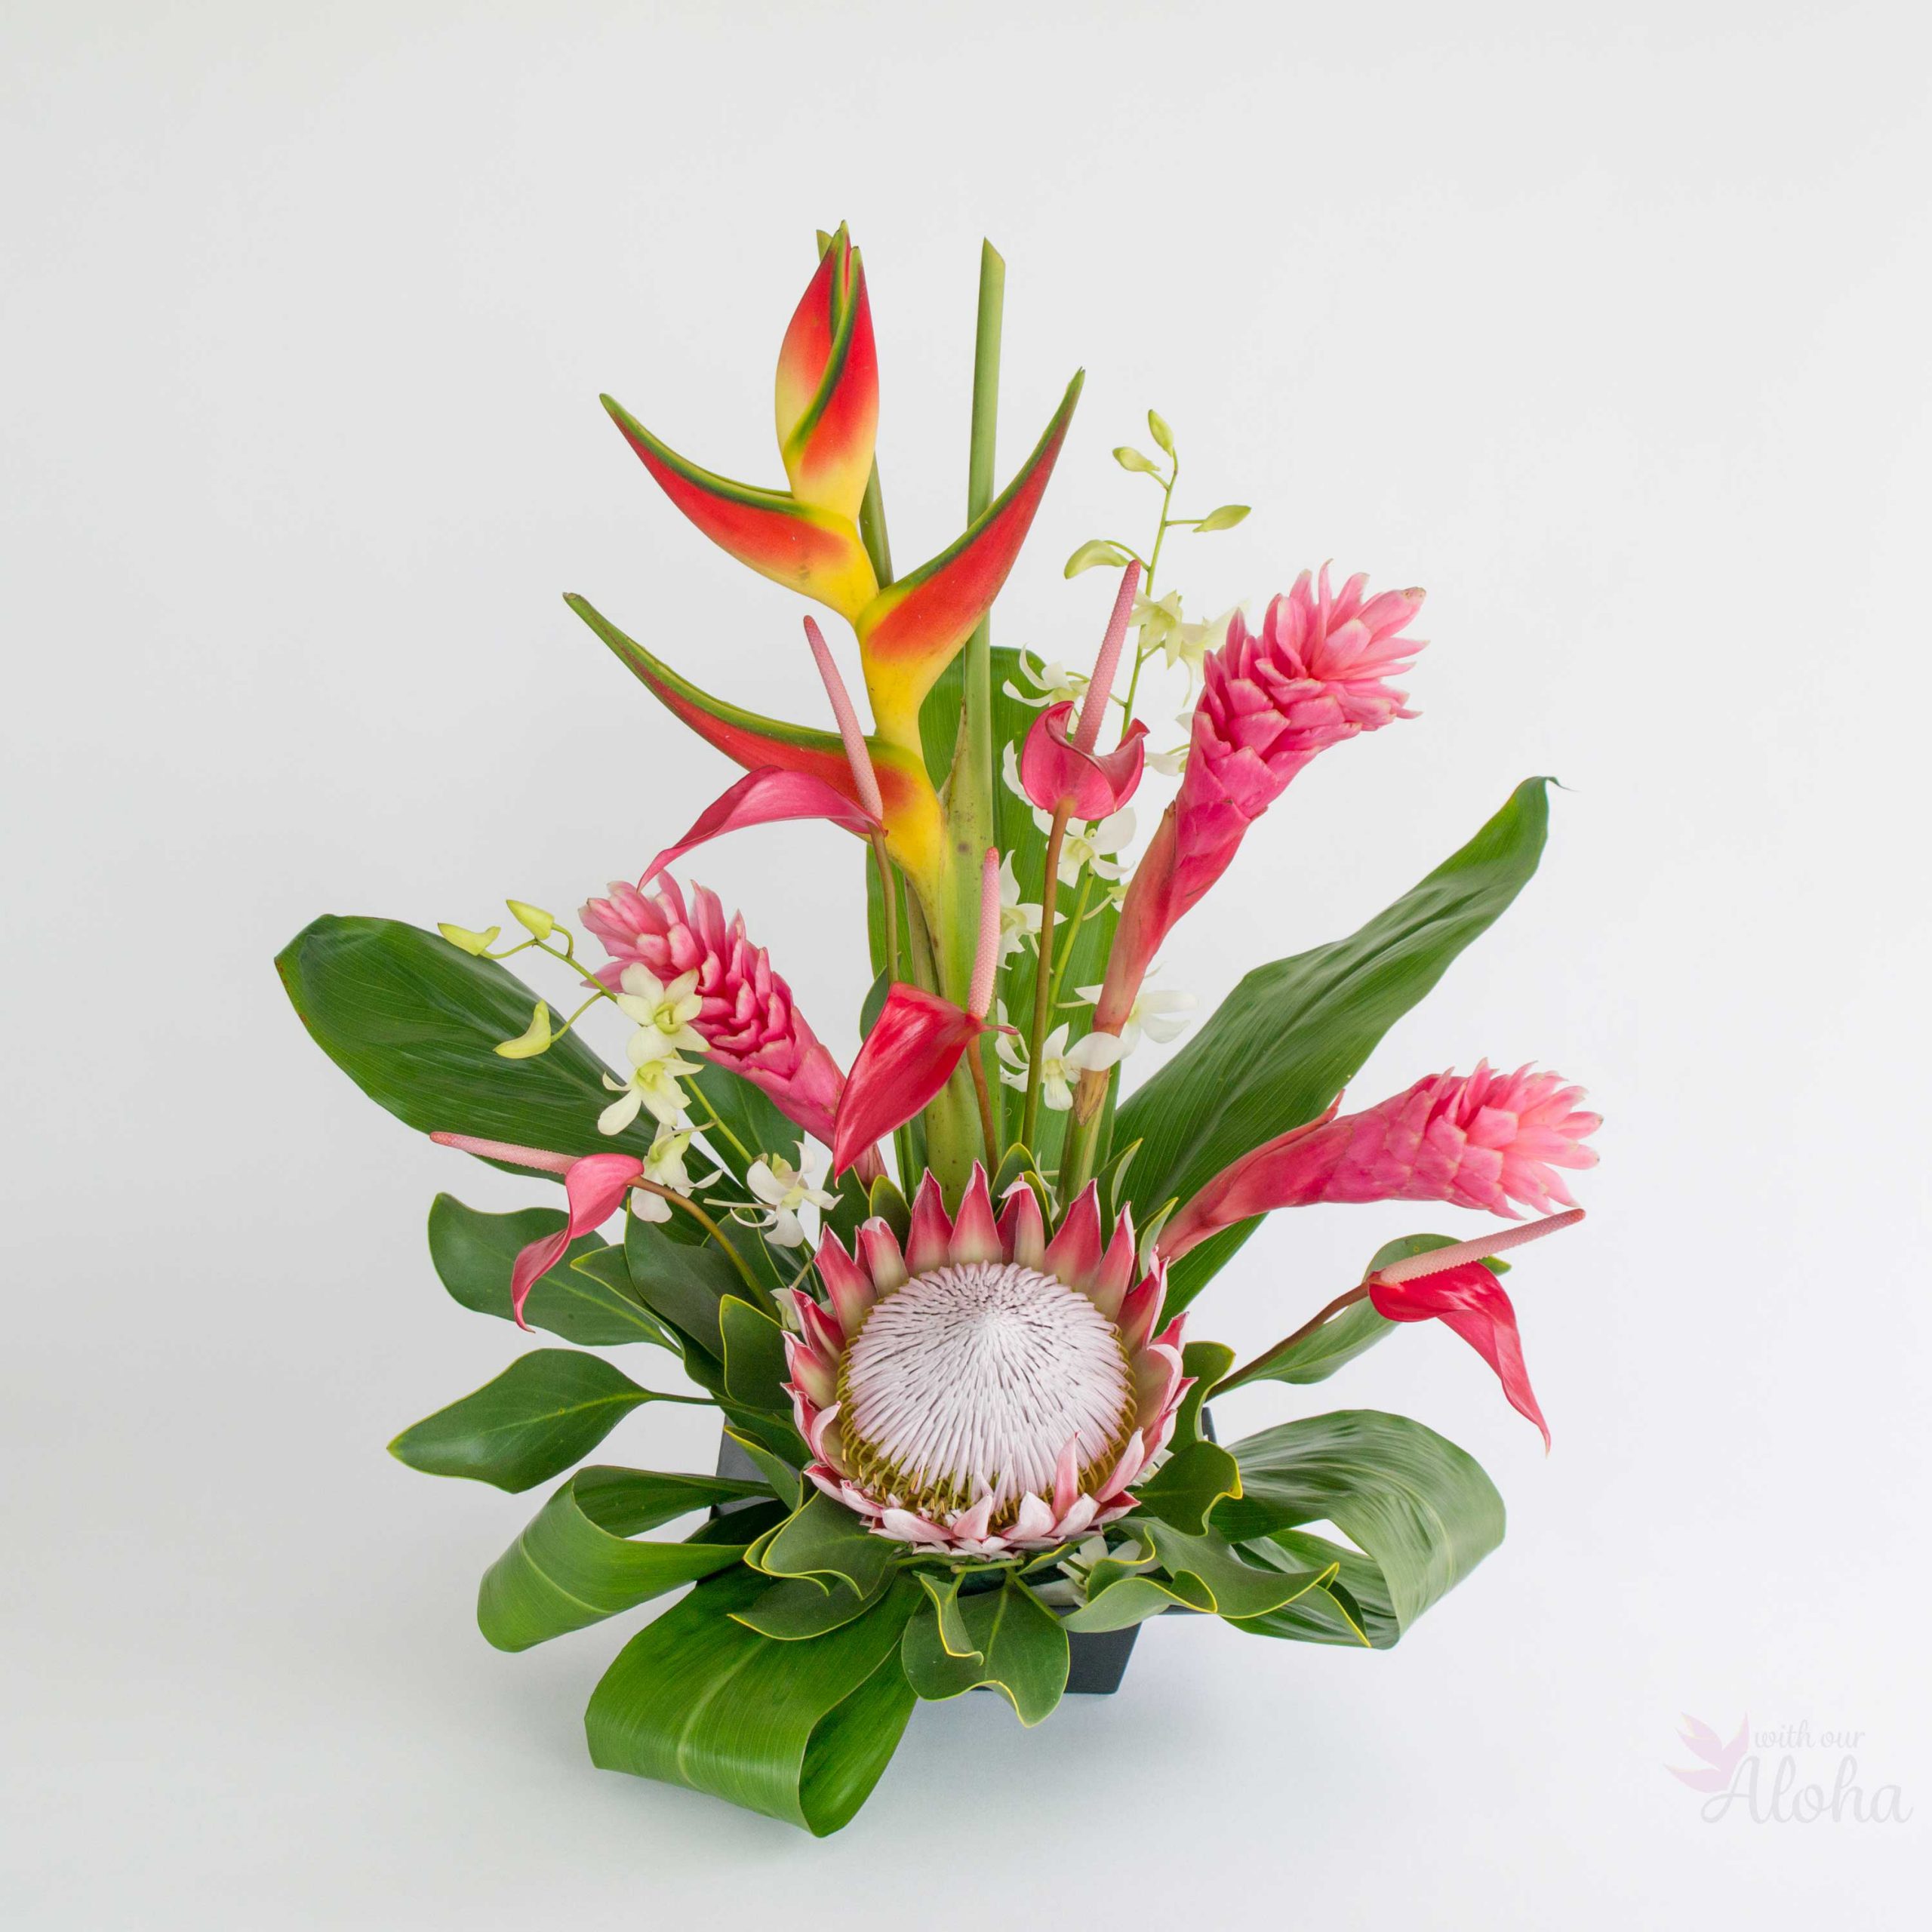 Hawaiian Flowers of the Month - Pink Hawaiian flowers with king protea